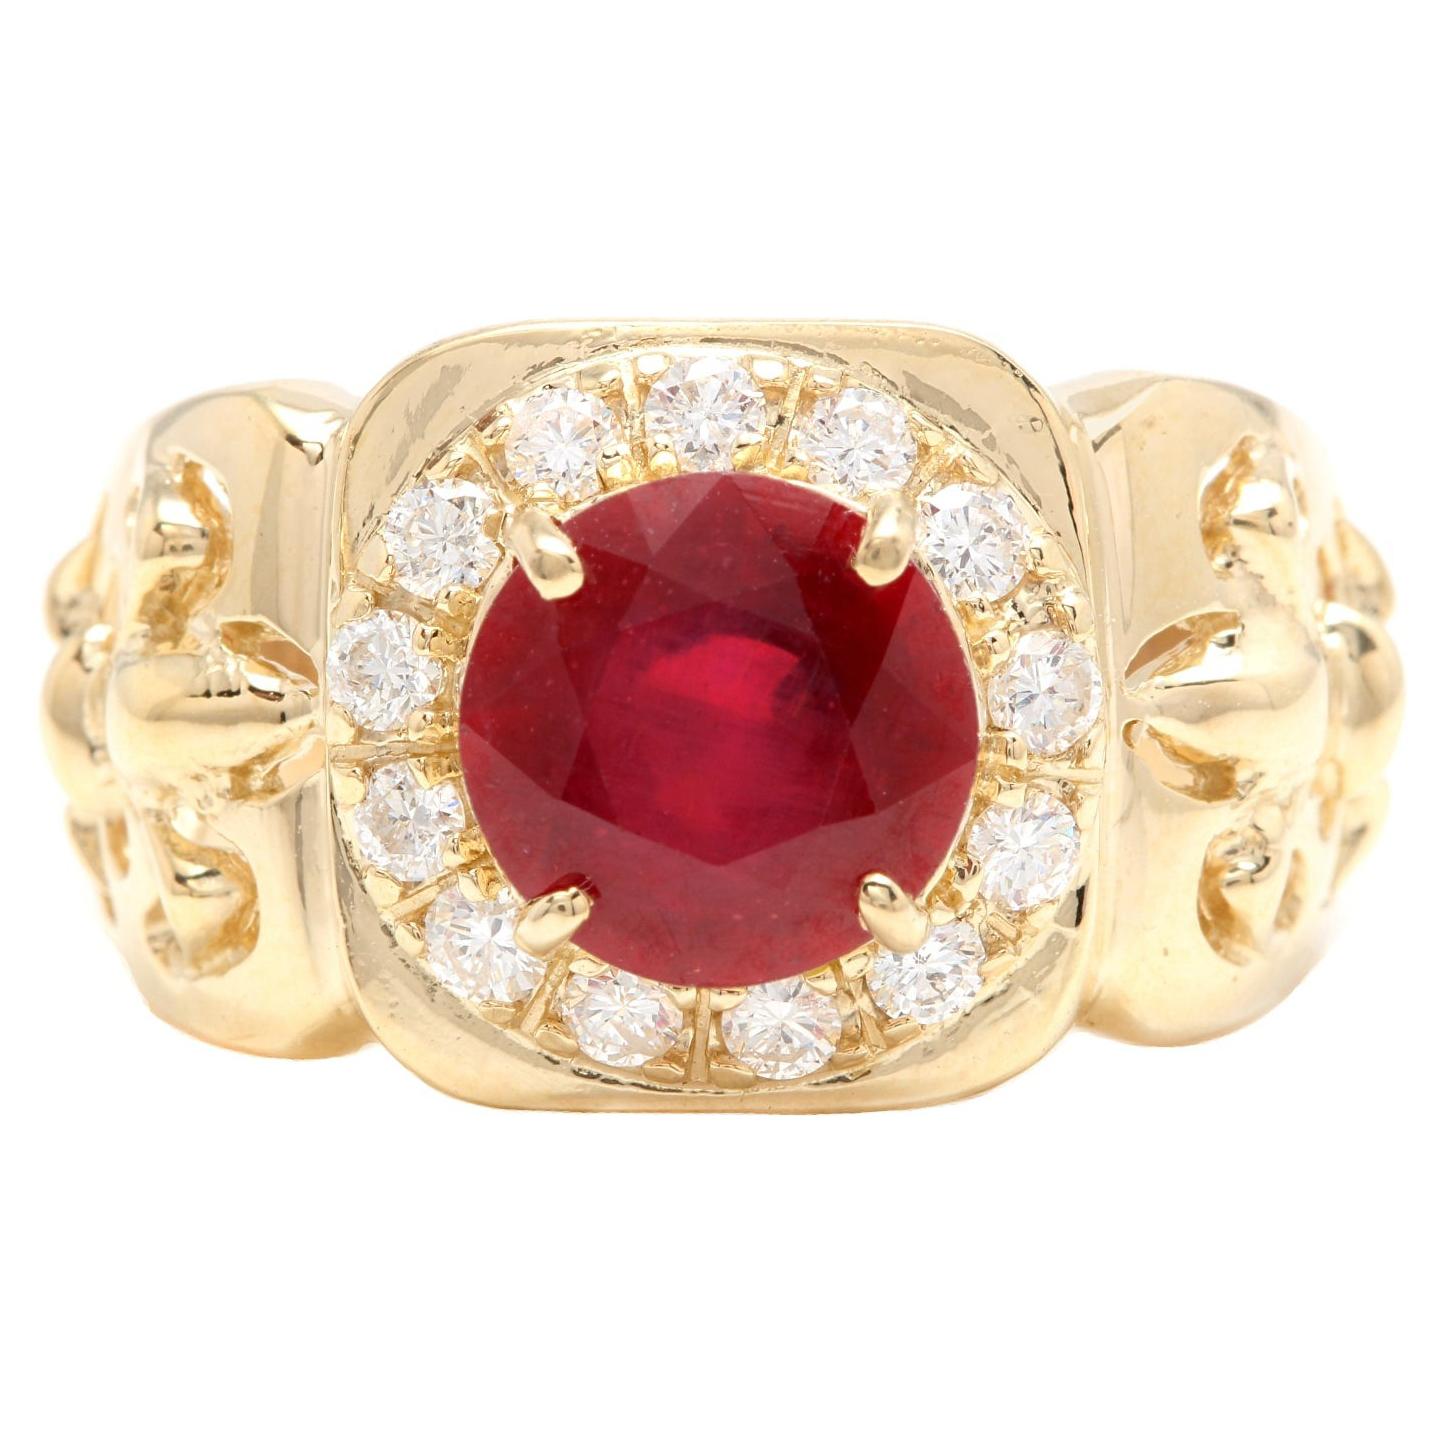 4.60 Carat Natural Ruby and Diamond 14 Karat Solid Yellow Gold Men's Ring